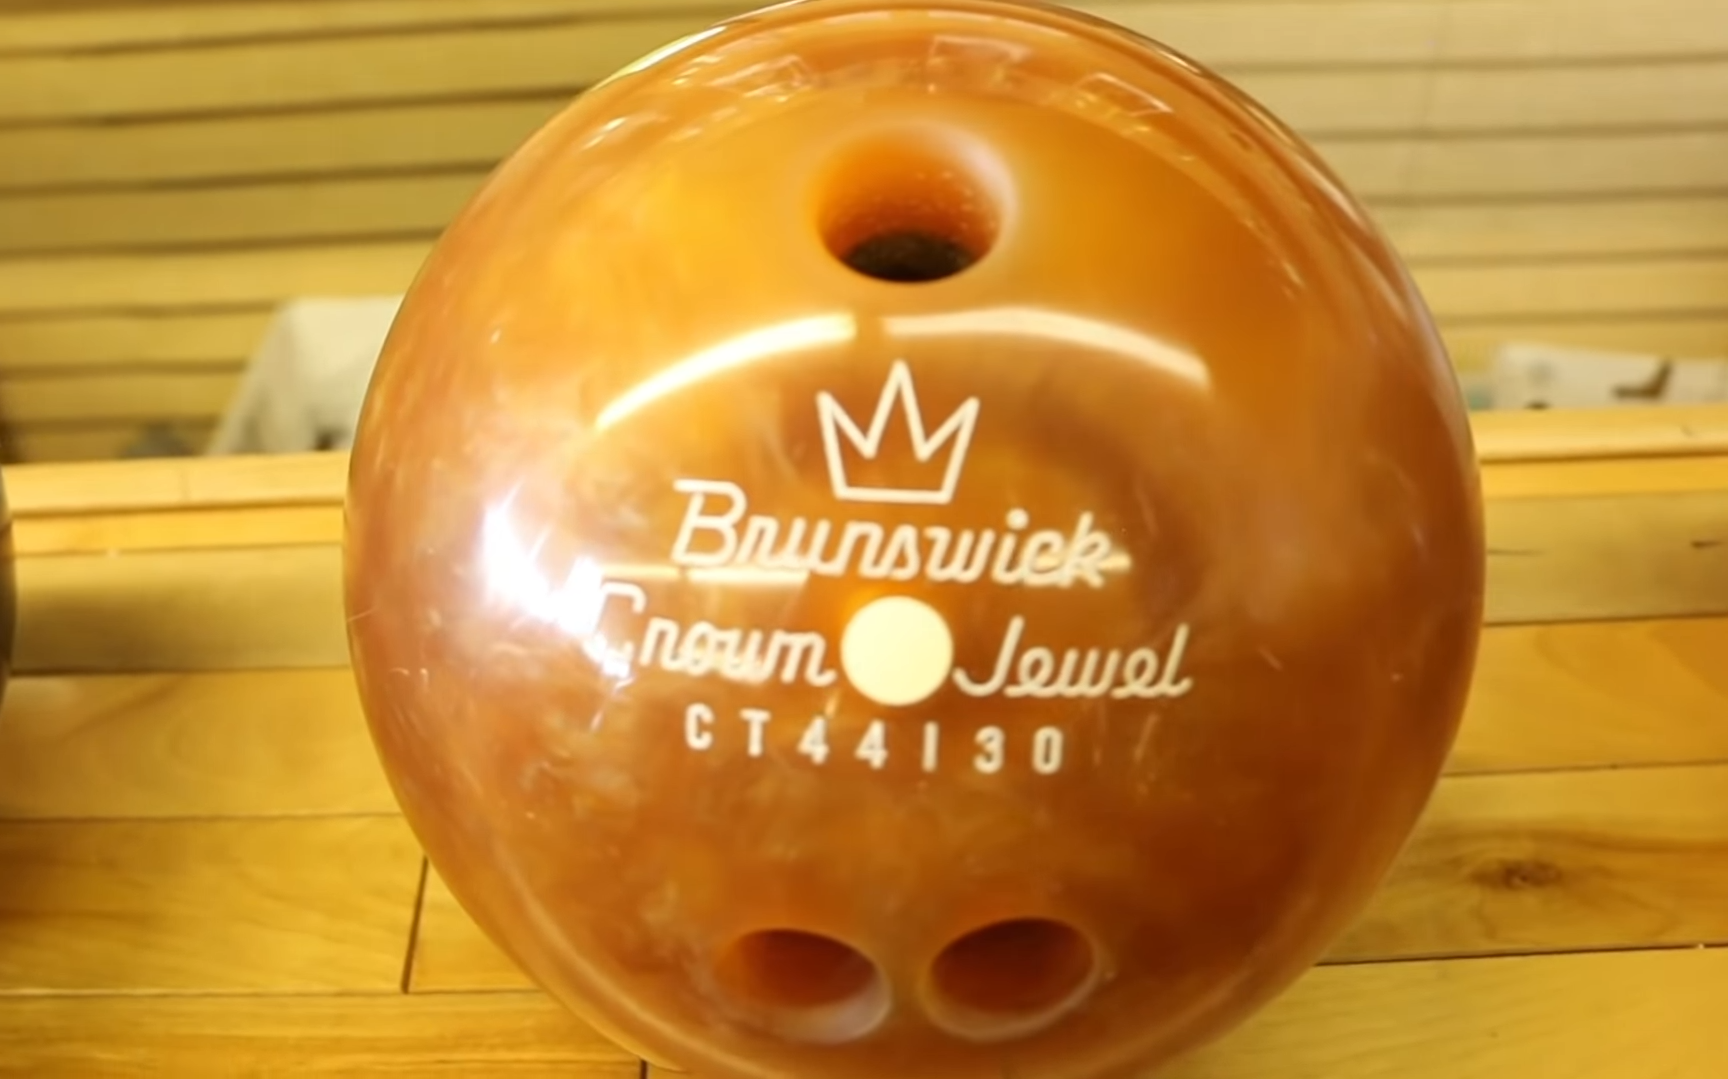 Brunswick crown jewel